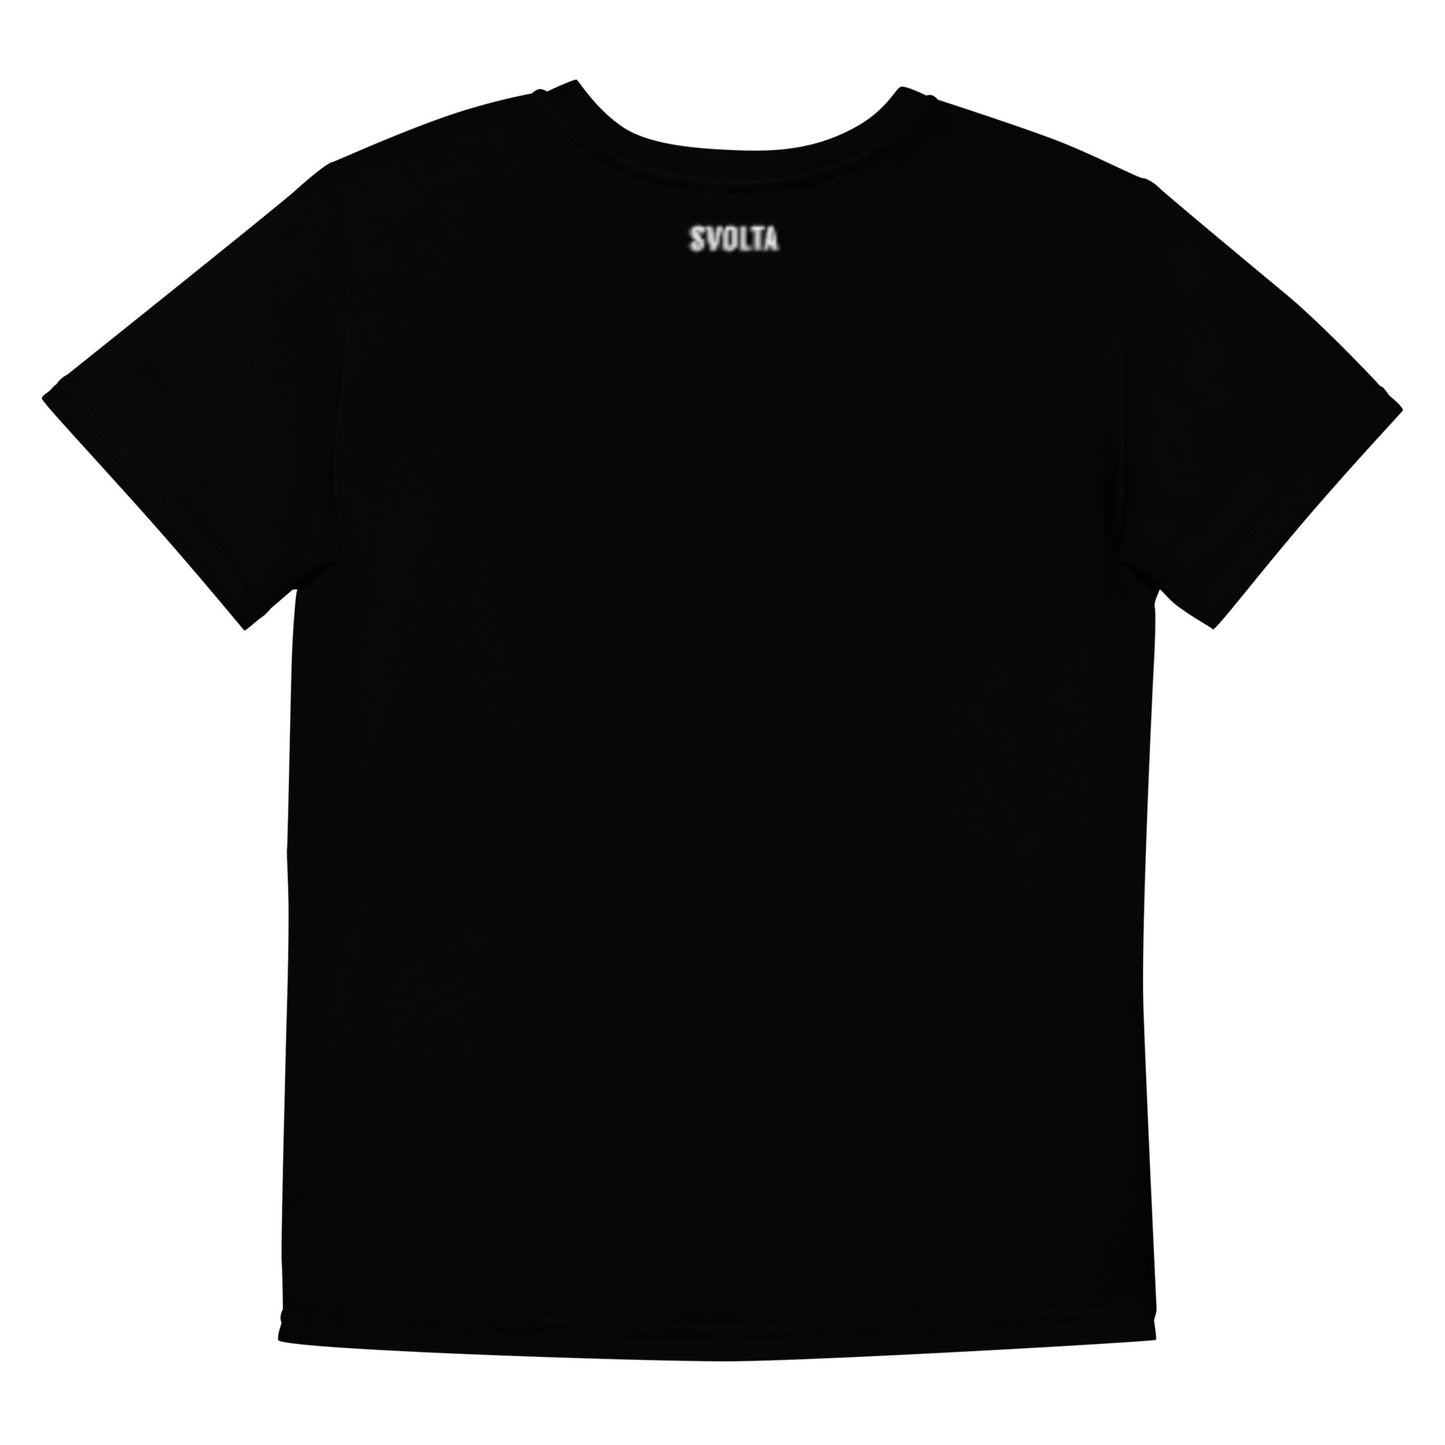 SVOLTA Kawaii Rebel Rock Duo T-shirt in Black, 8-20 - Kids/Youth